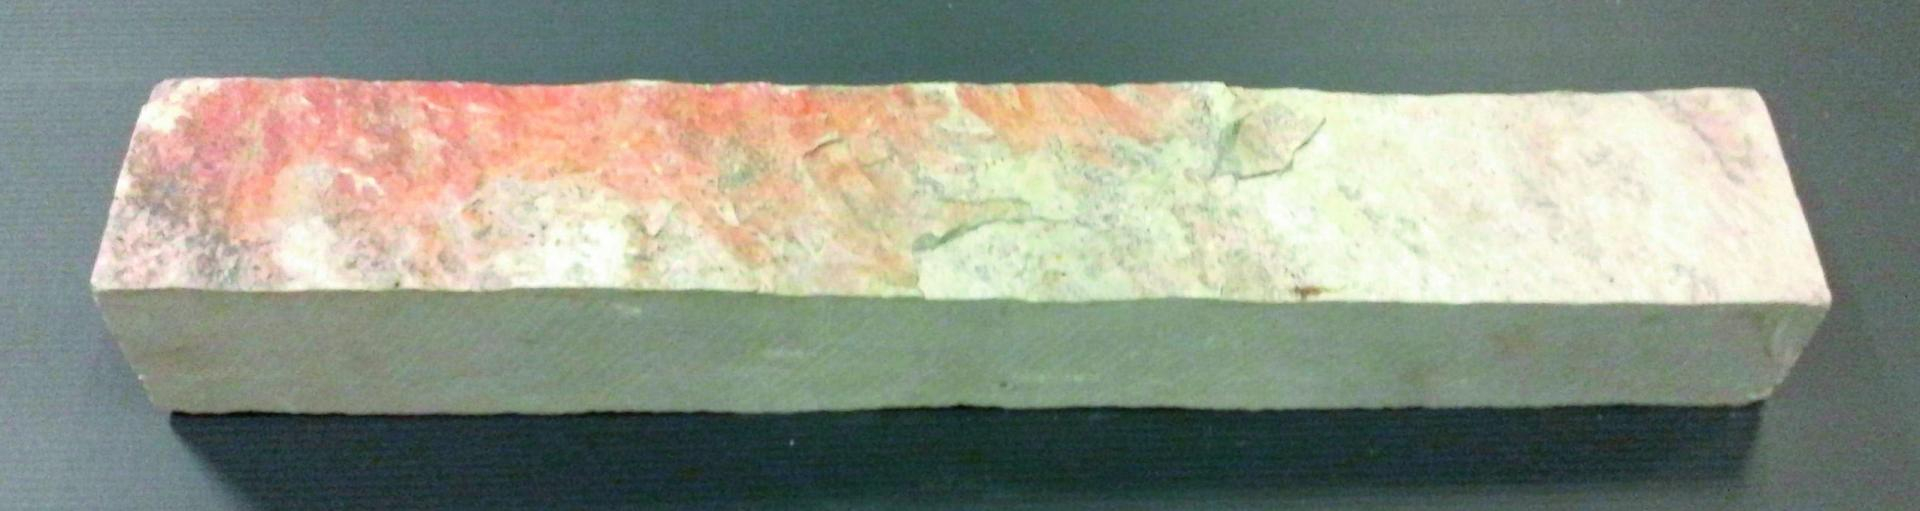 bordure-quartzite-cuivree-50x8x6-8cm-2-faces-clivees-edycem-0